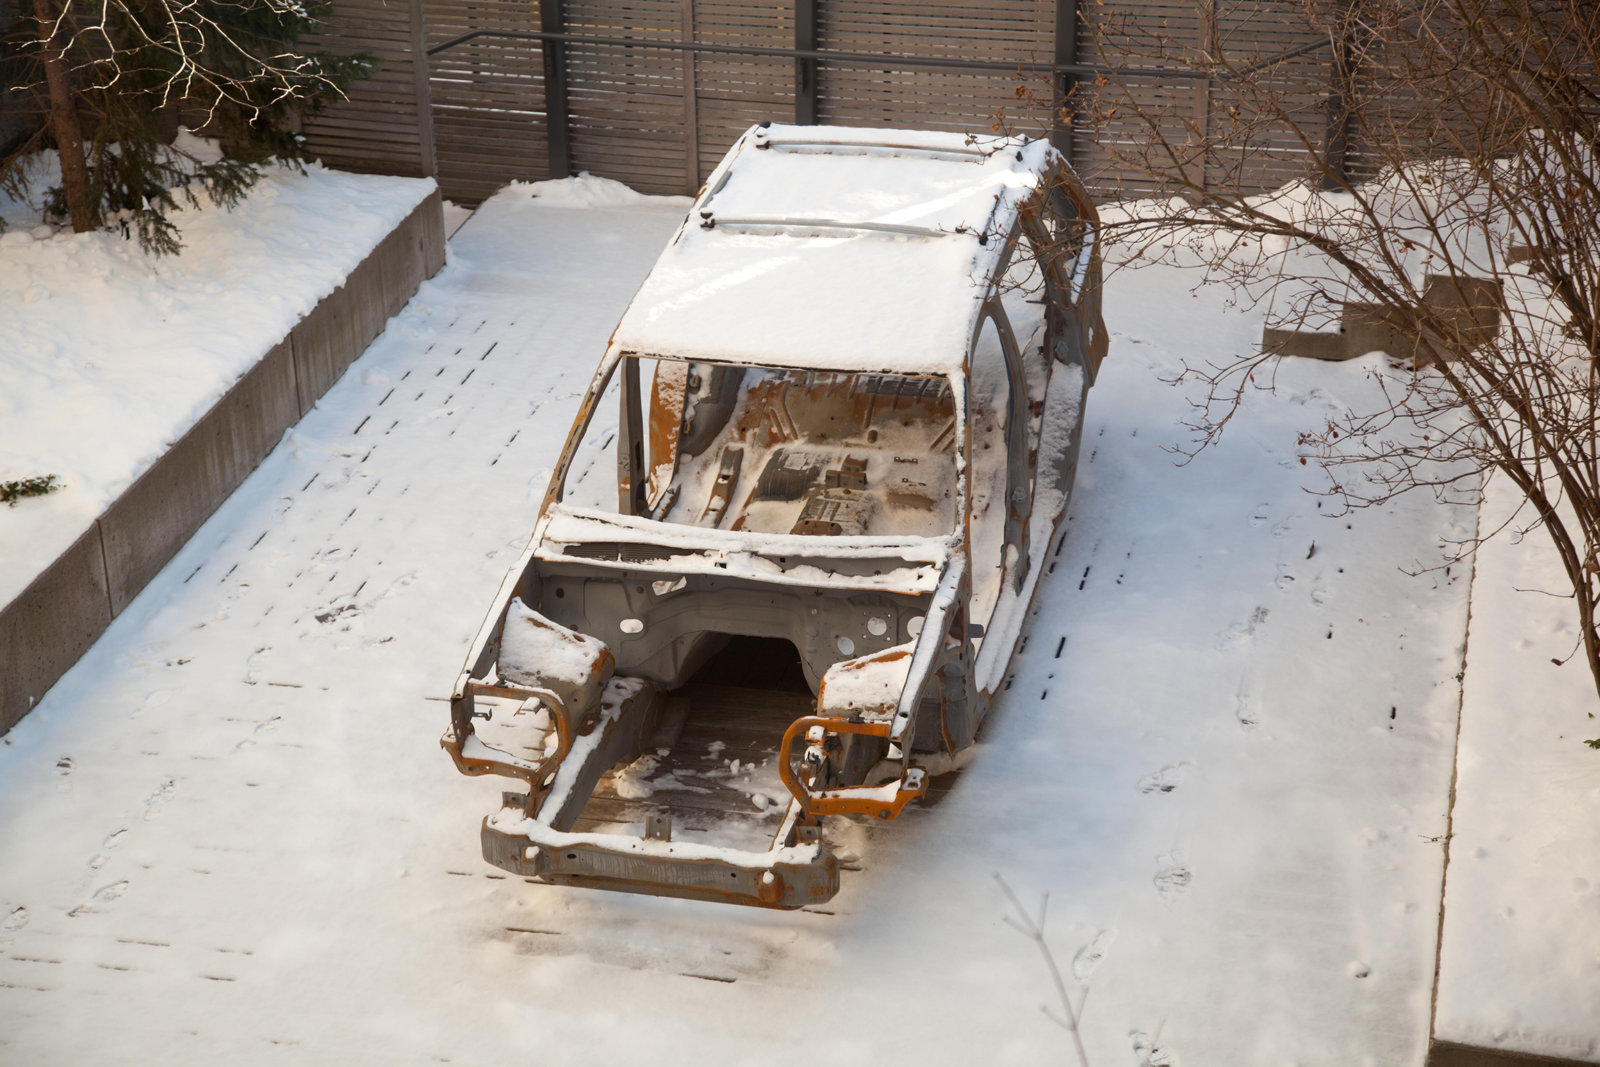 Duane Linklater, 2005 Grand Jeep Cherokee, 2013, steel frame of artist’s vehicle. dimensions variable